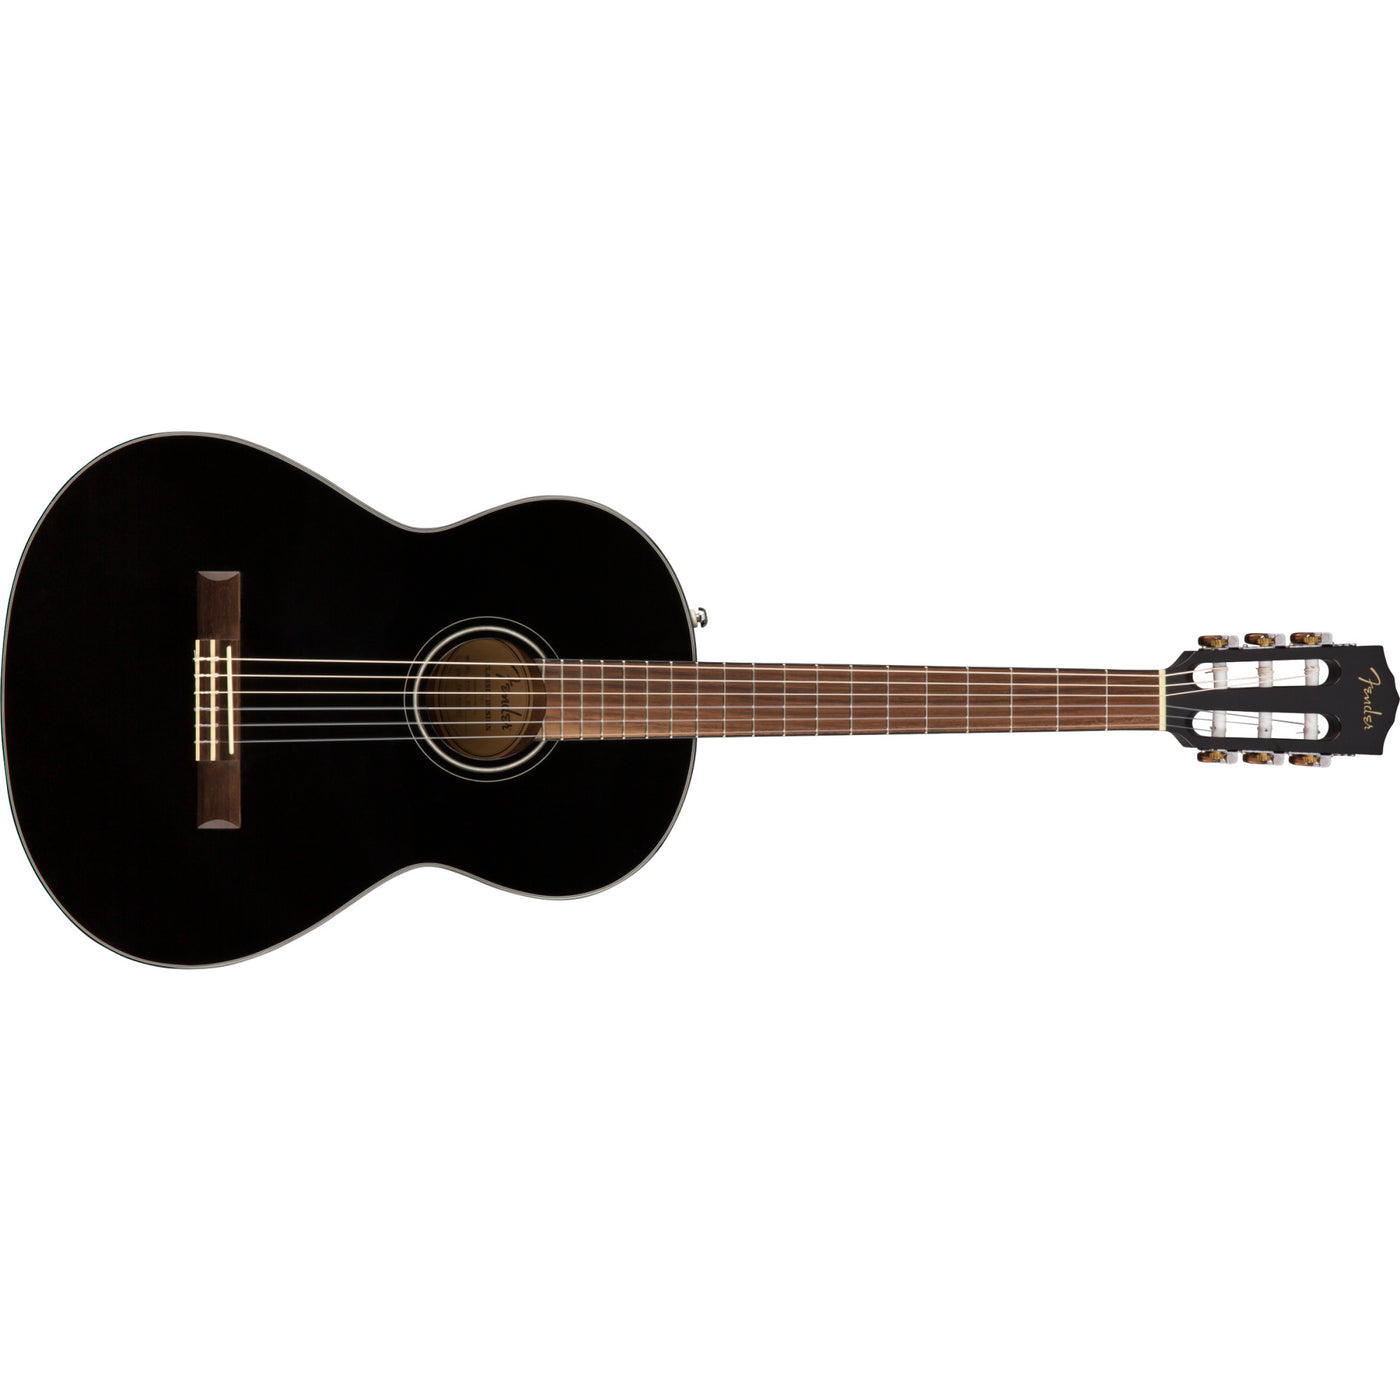 Fender CN-60S Acoustic Guitar, Black (0970160506)